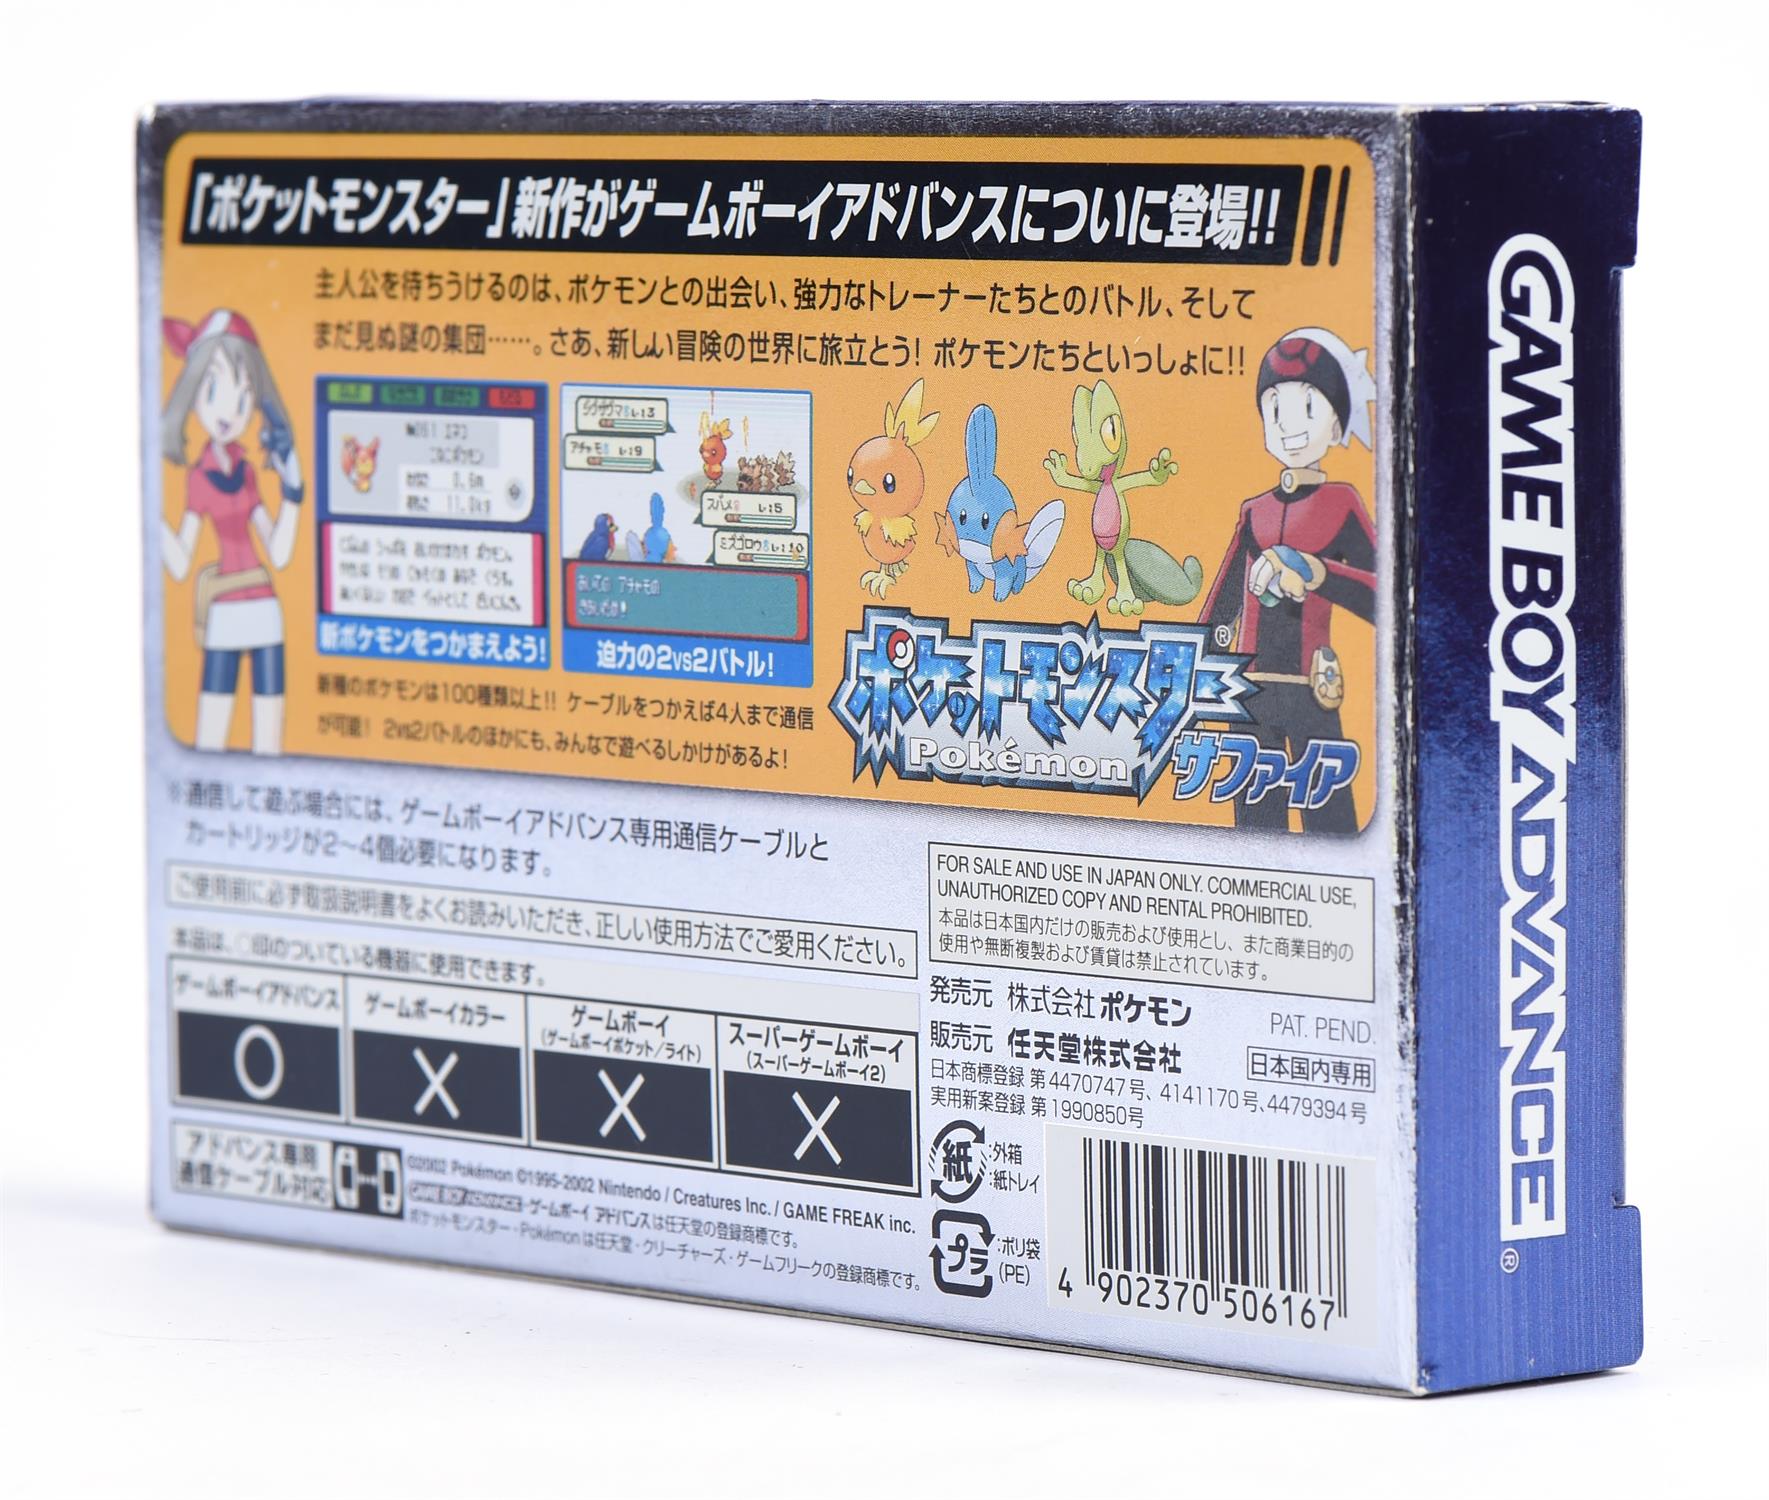 Pokémon Sapphire Game Boy Advance (GBA) game - Image 2 of 5